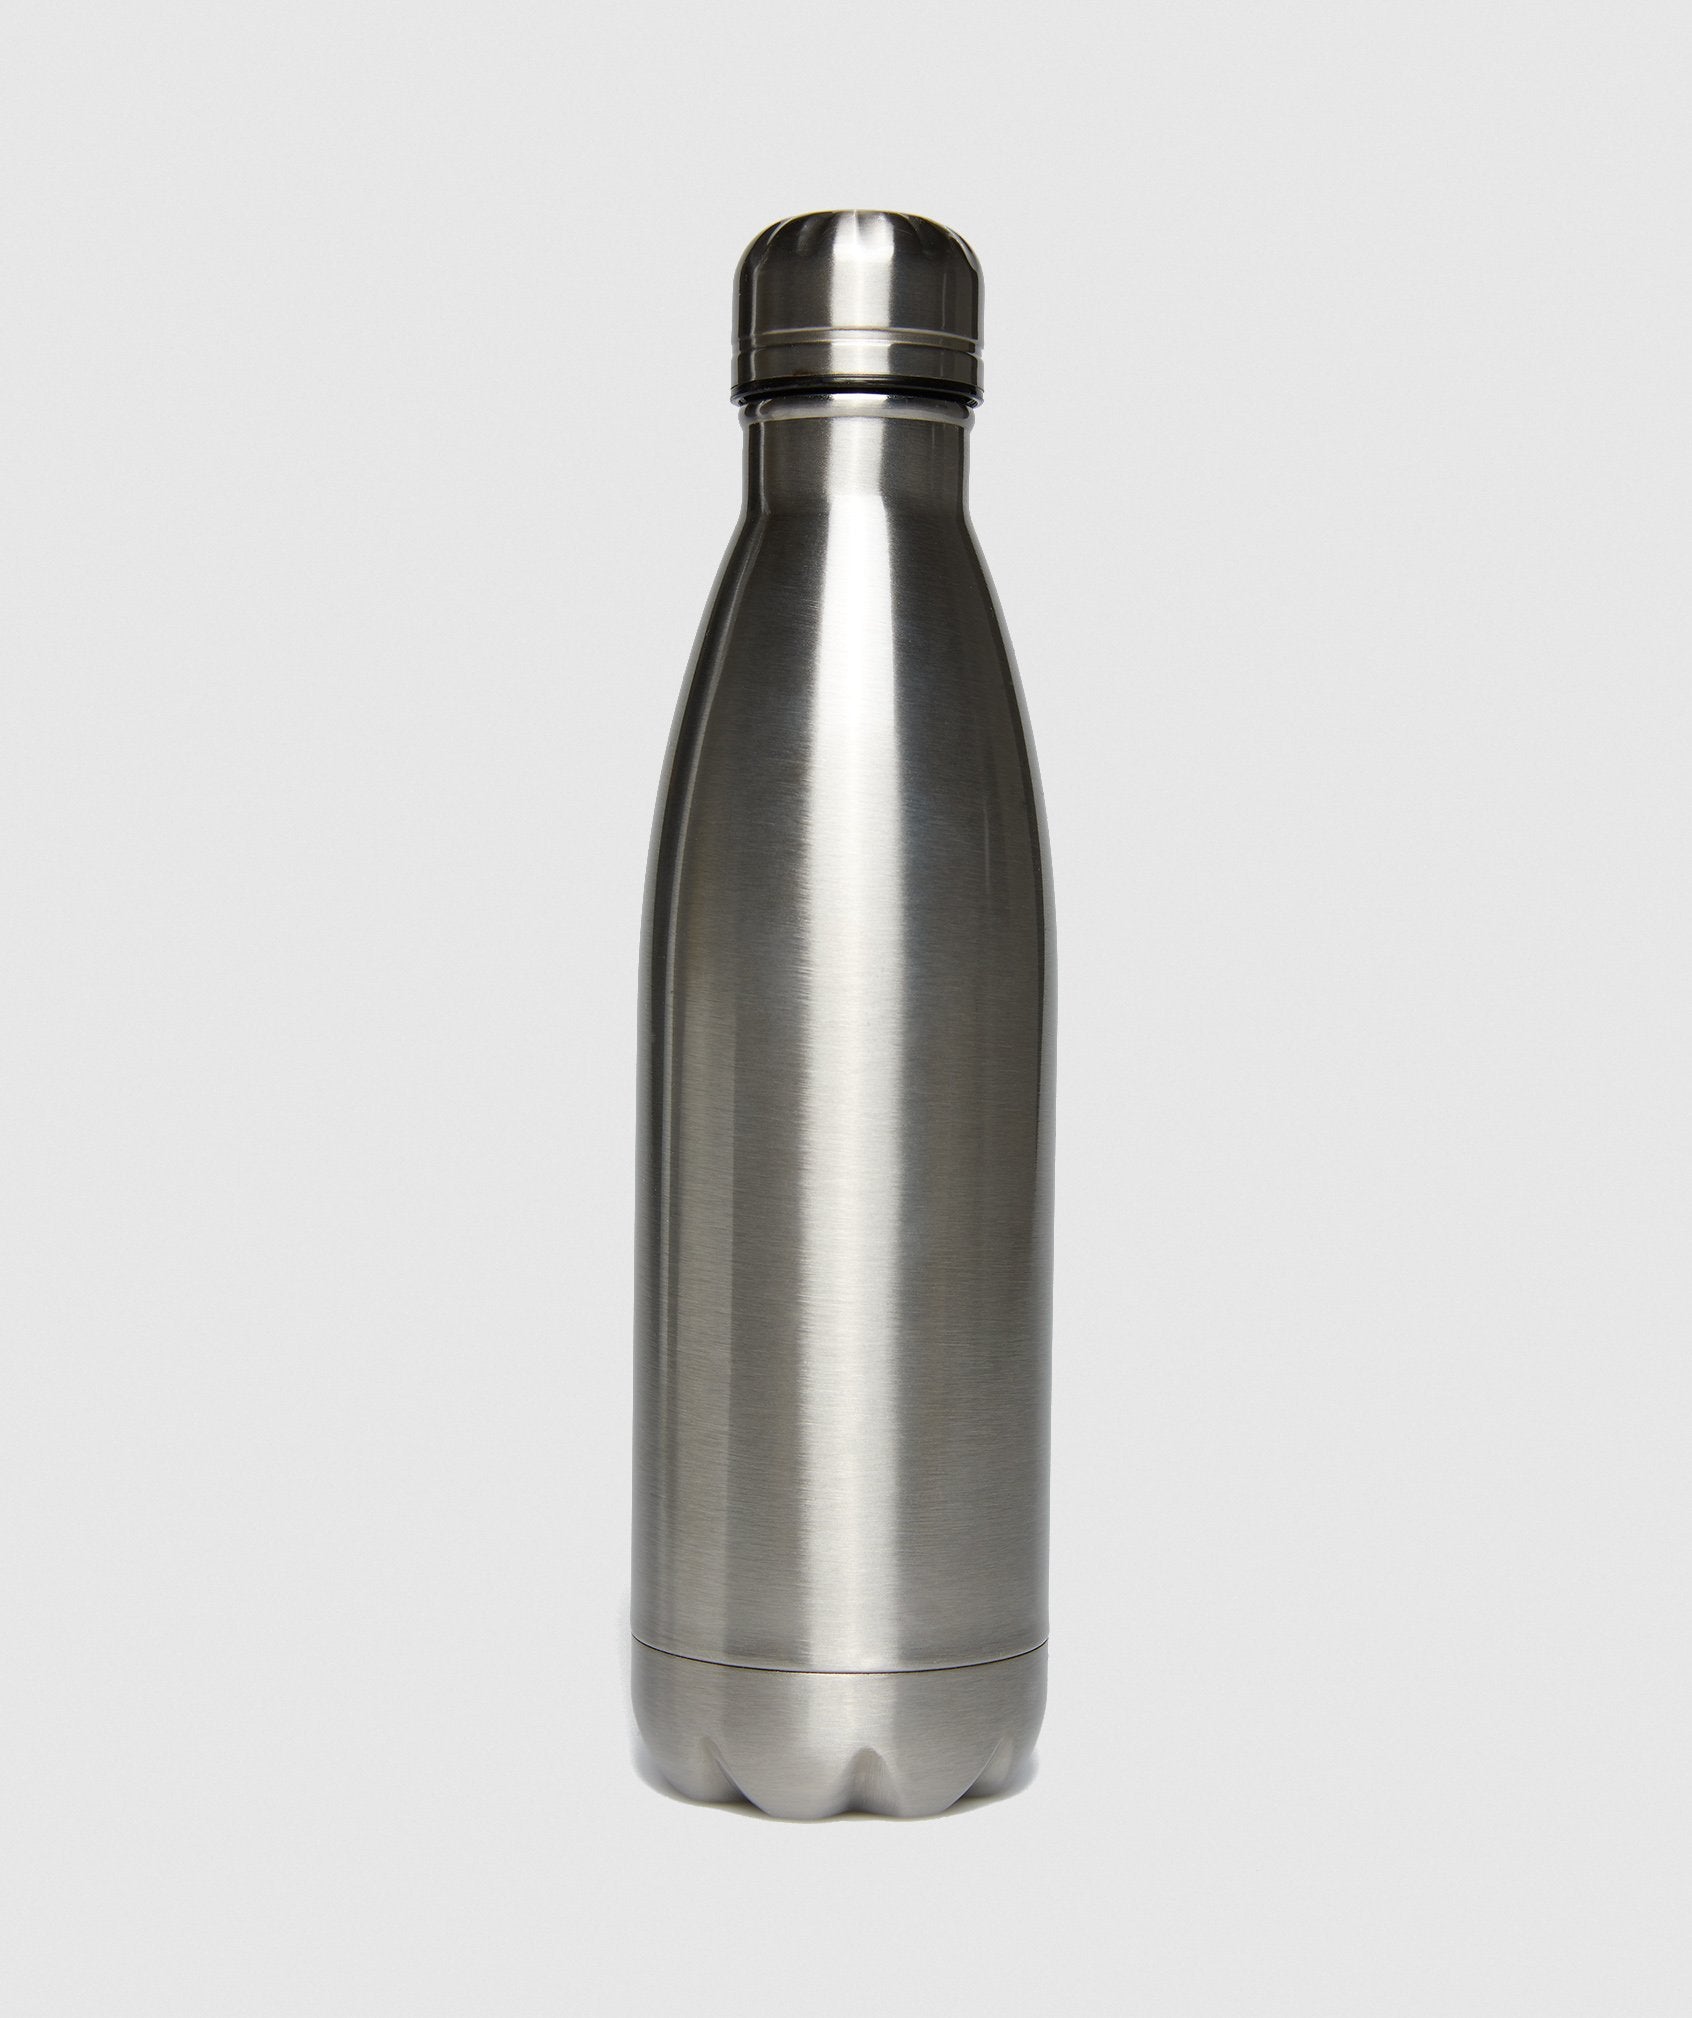 Metal Water Bottle in Gun Metal SIlver - view 2